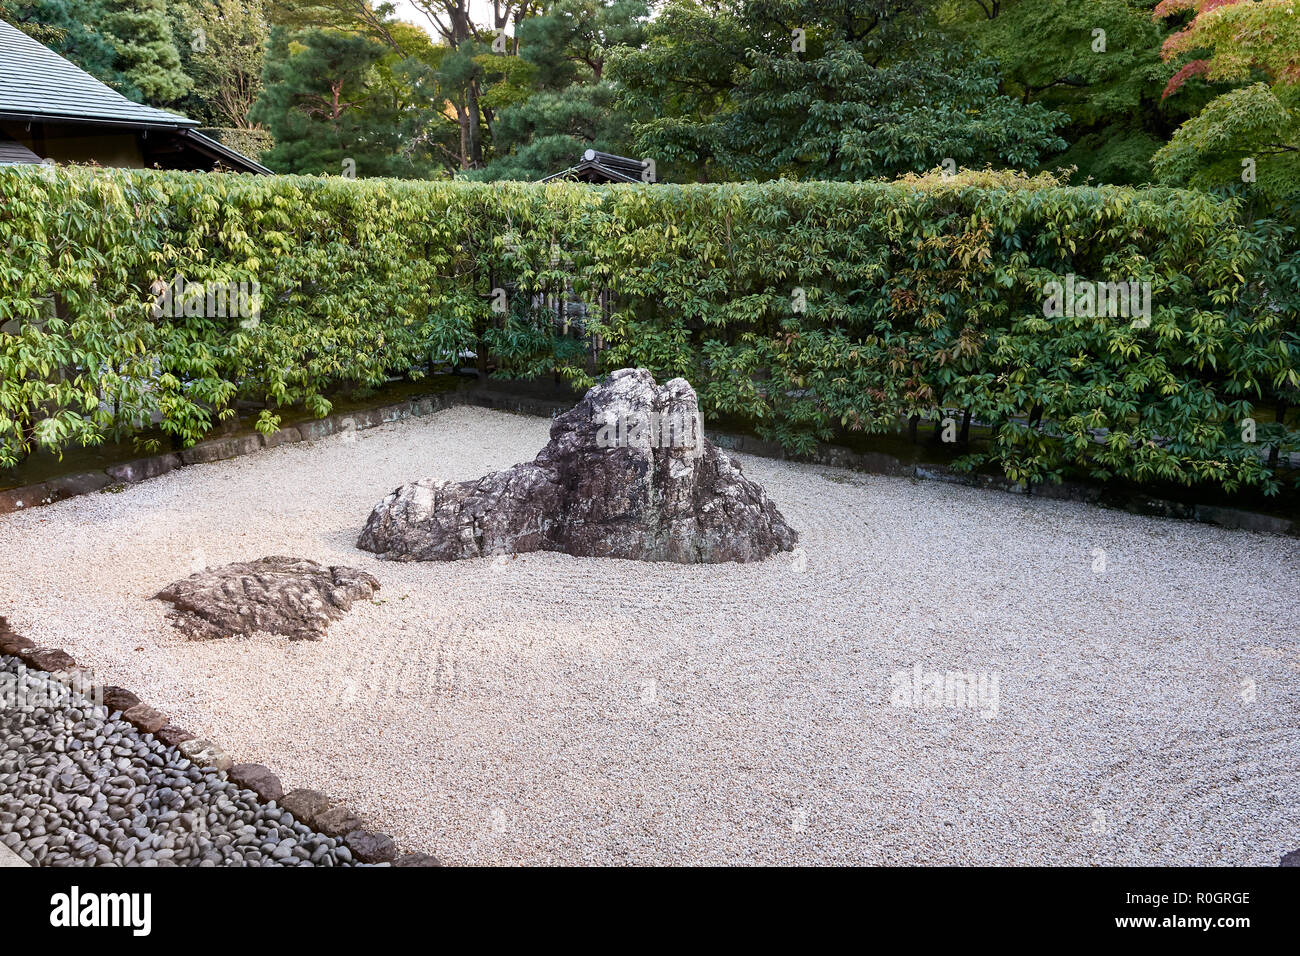 Shirotori Zen jardín de rocas en el parque, Nagoya. Foto de stock